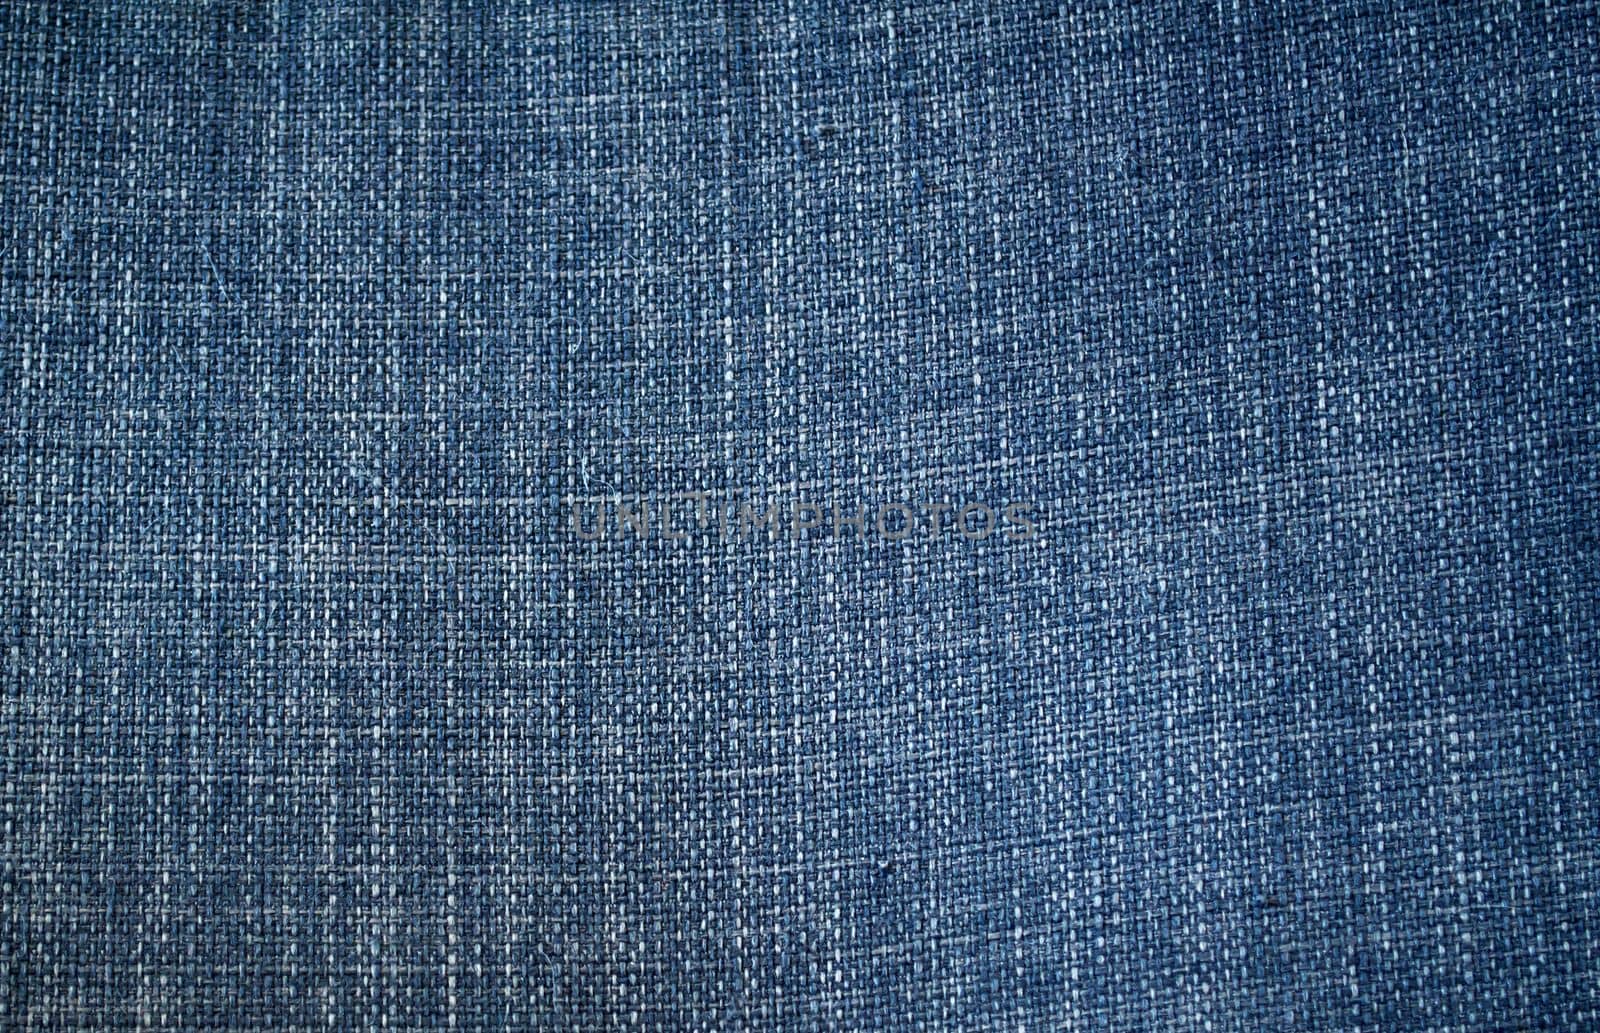 
Background, texture, denim. Close-up photo of blue denim fabric.